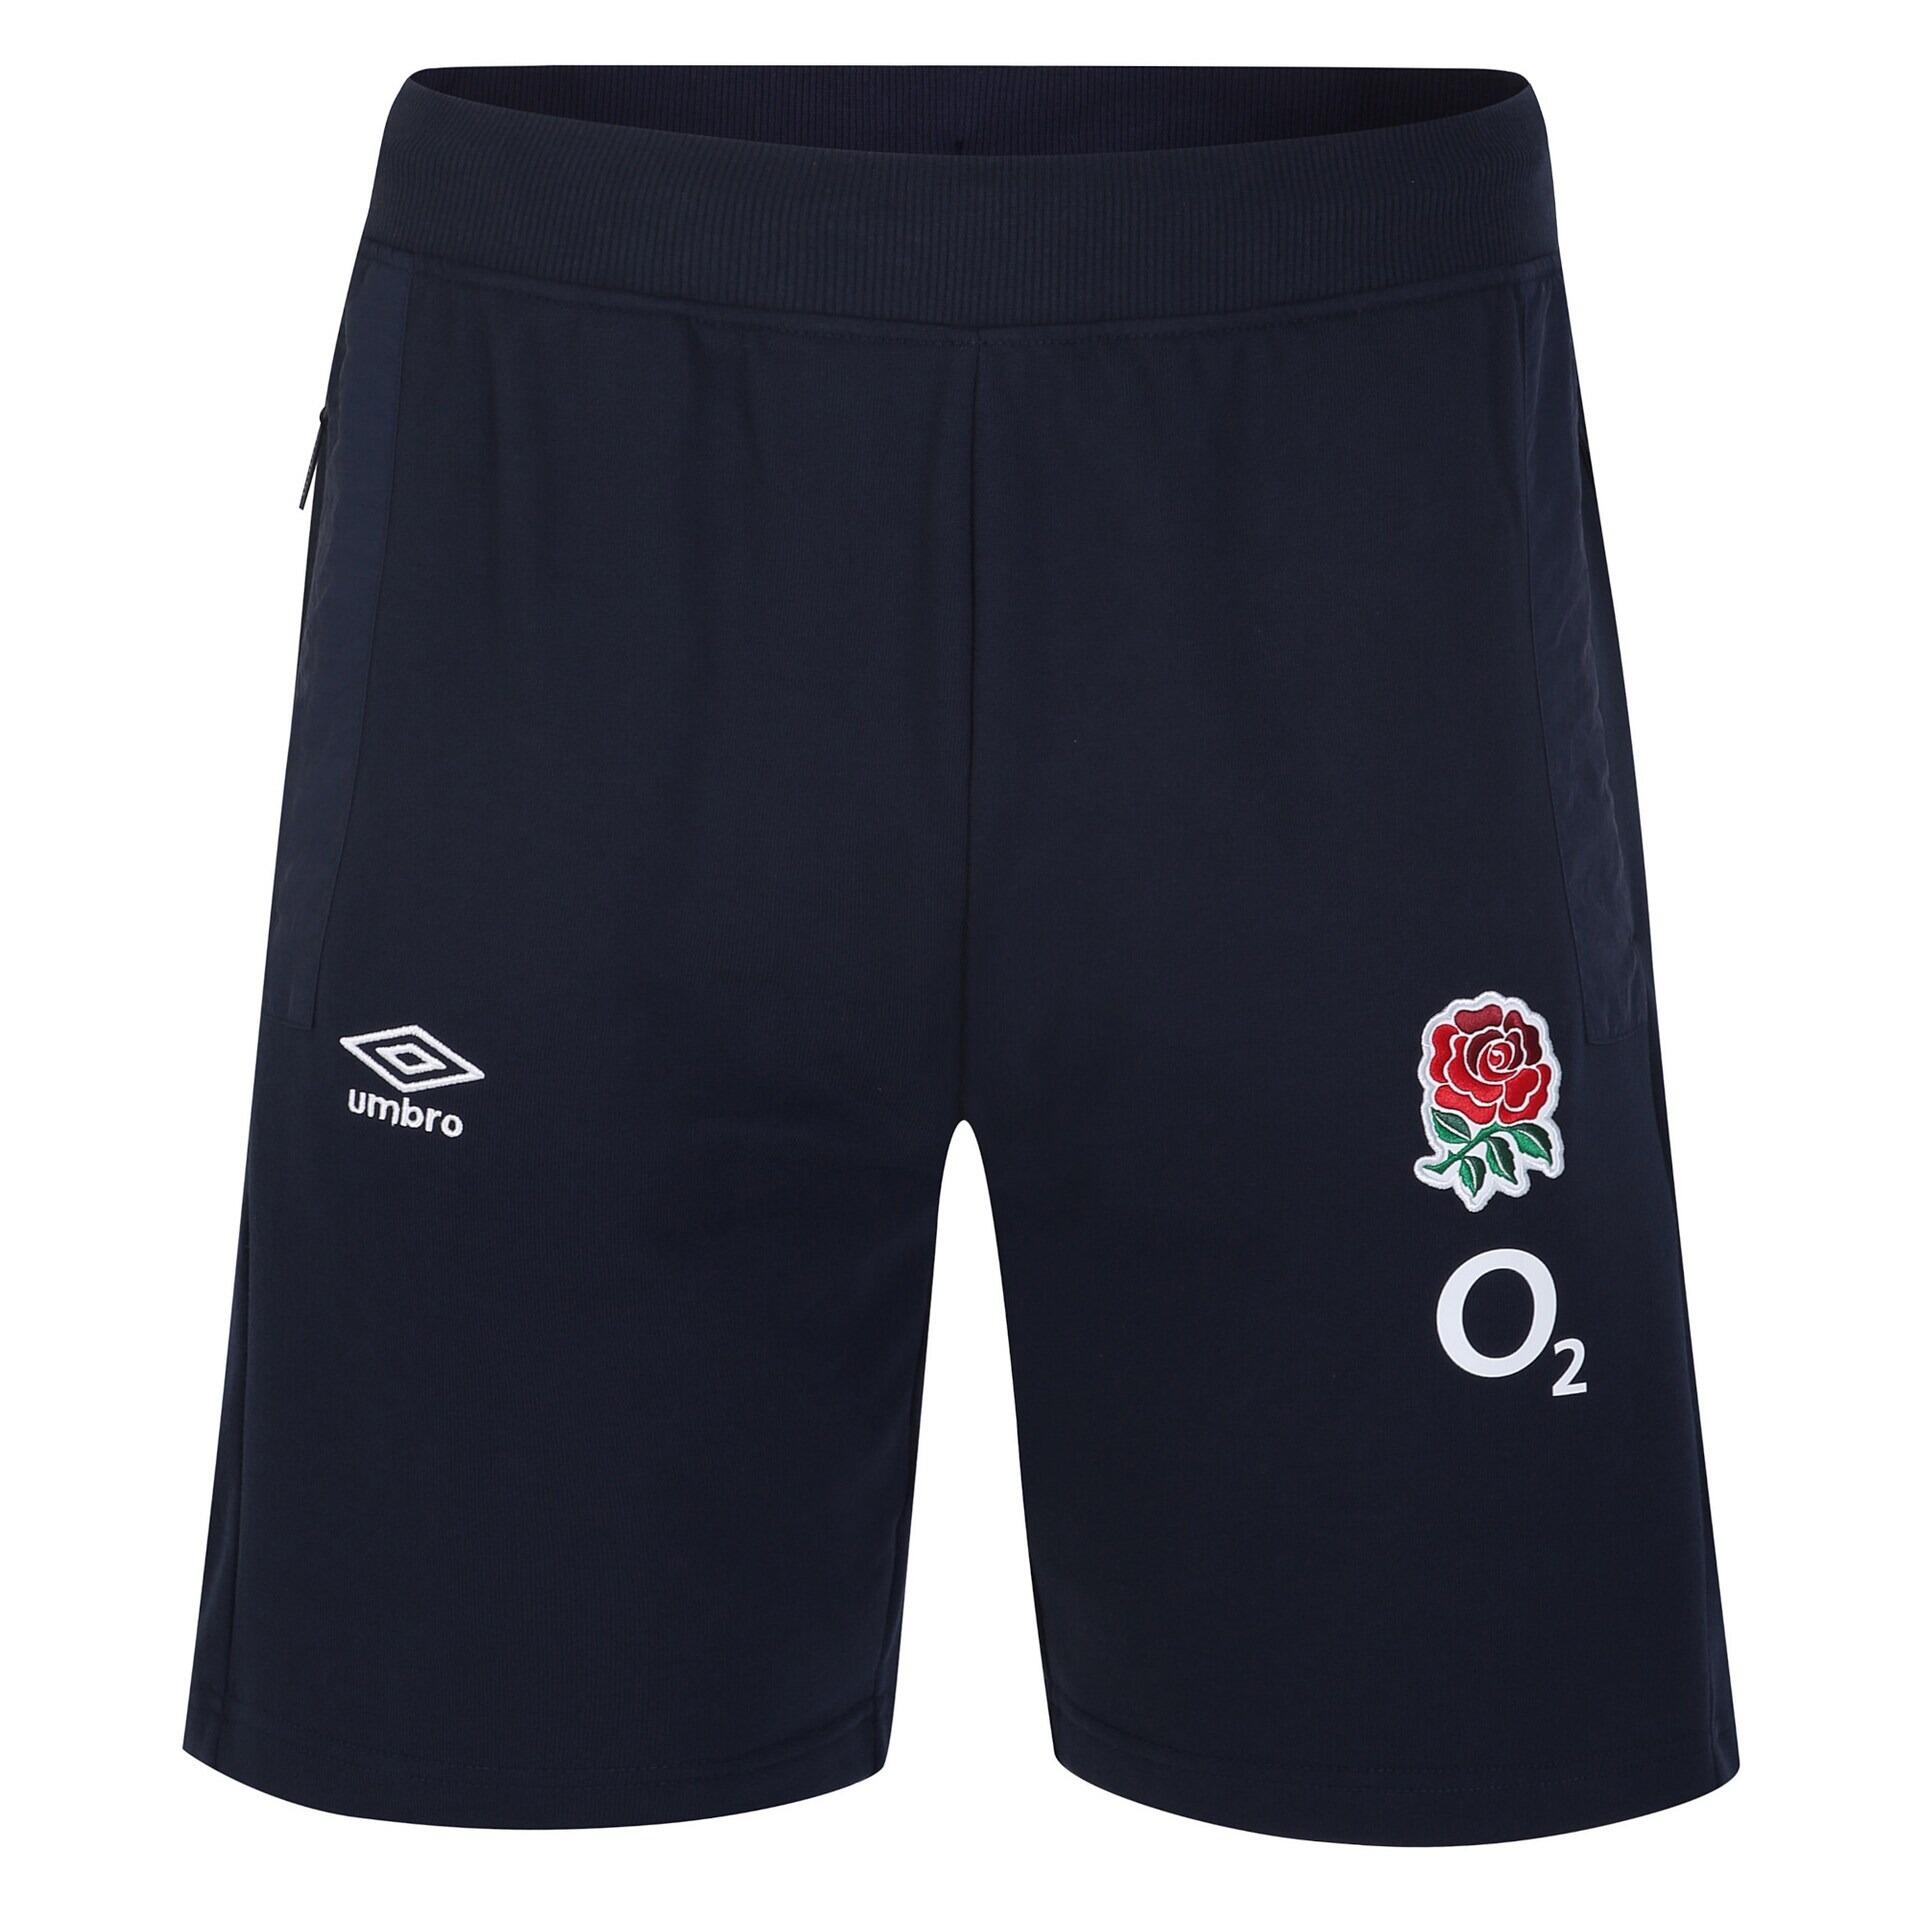 UMBRO Umbro England Rugby Mens Fleece Shorts